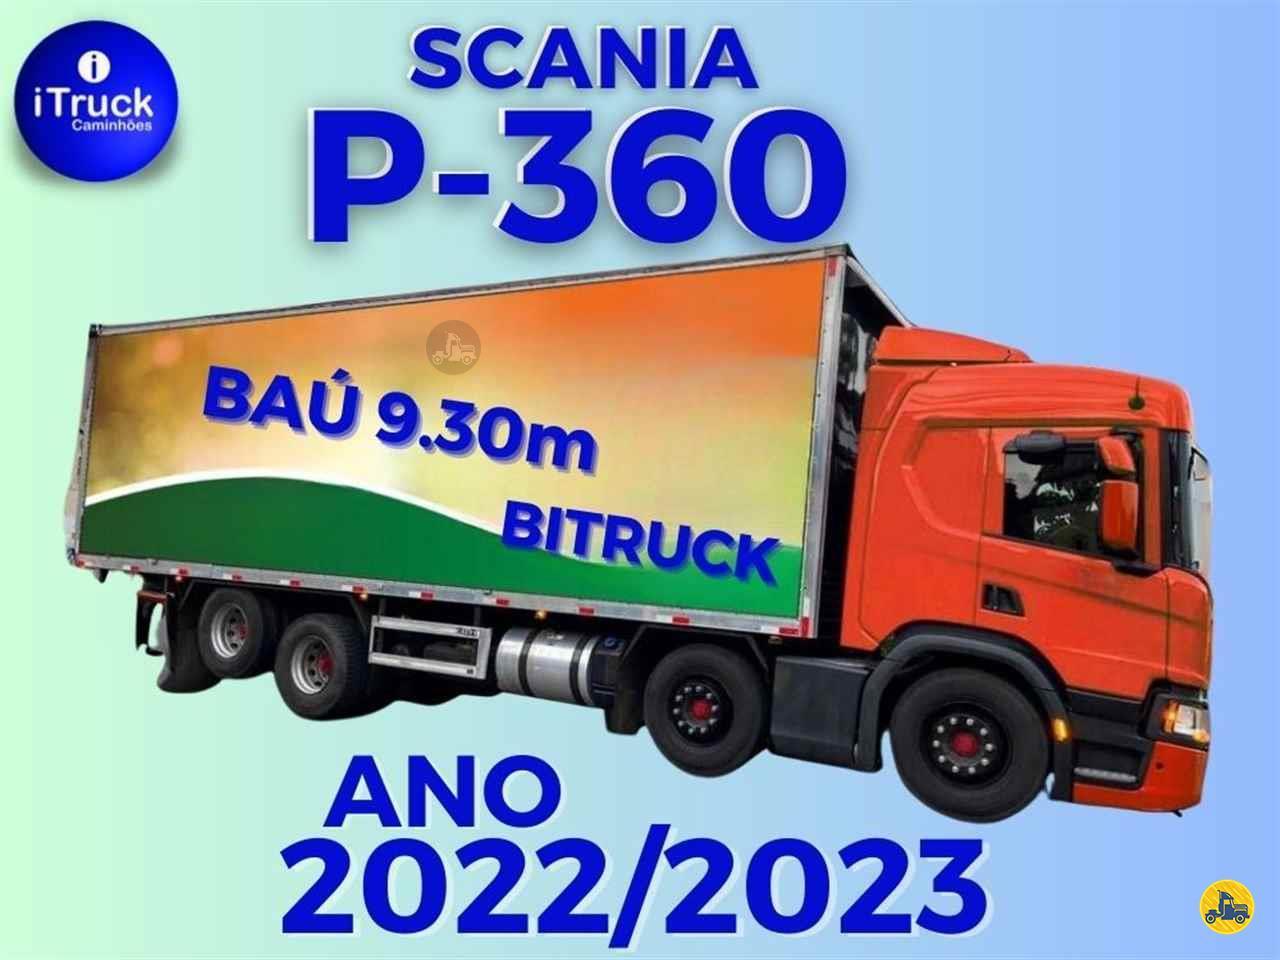 SCANIA P360